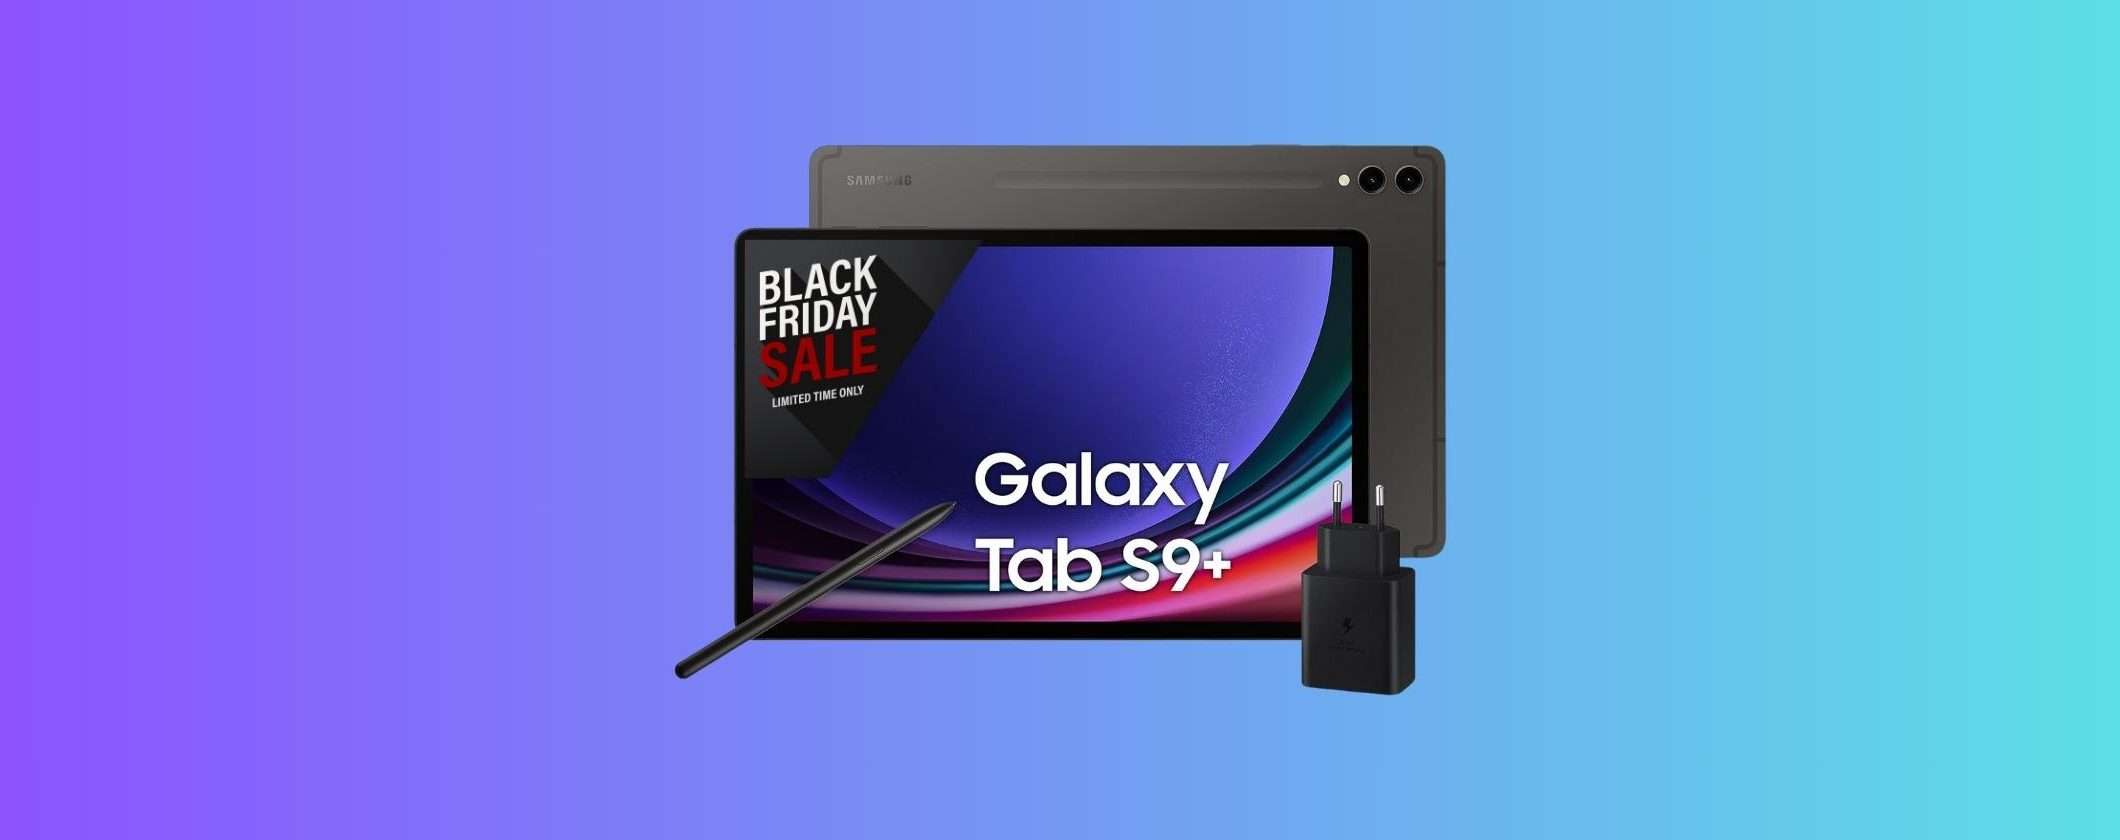 Samsung Galaxy Tab S9+: BOMBA Black Friday su Amazon